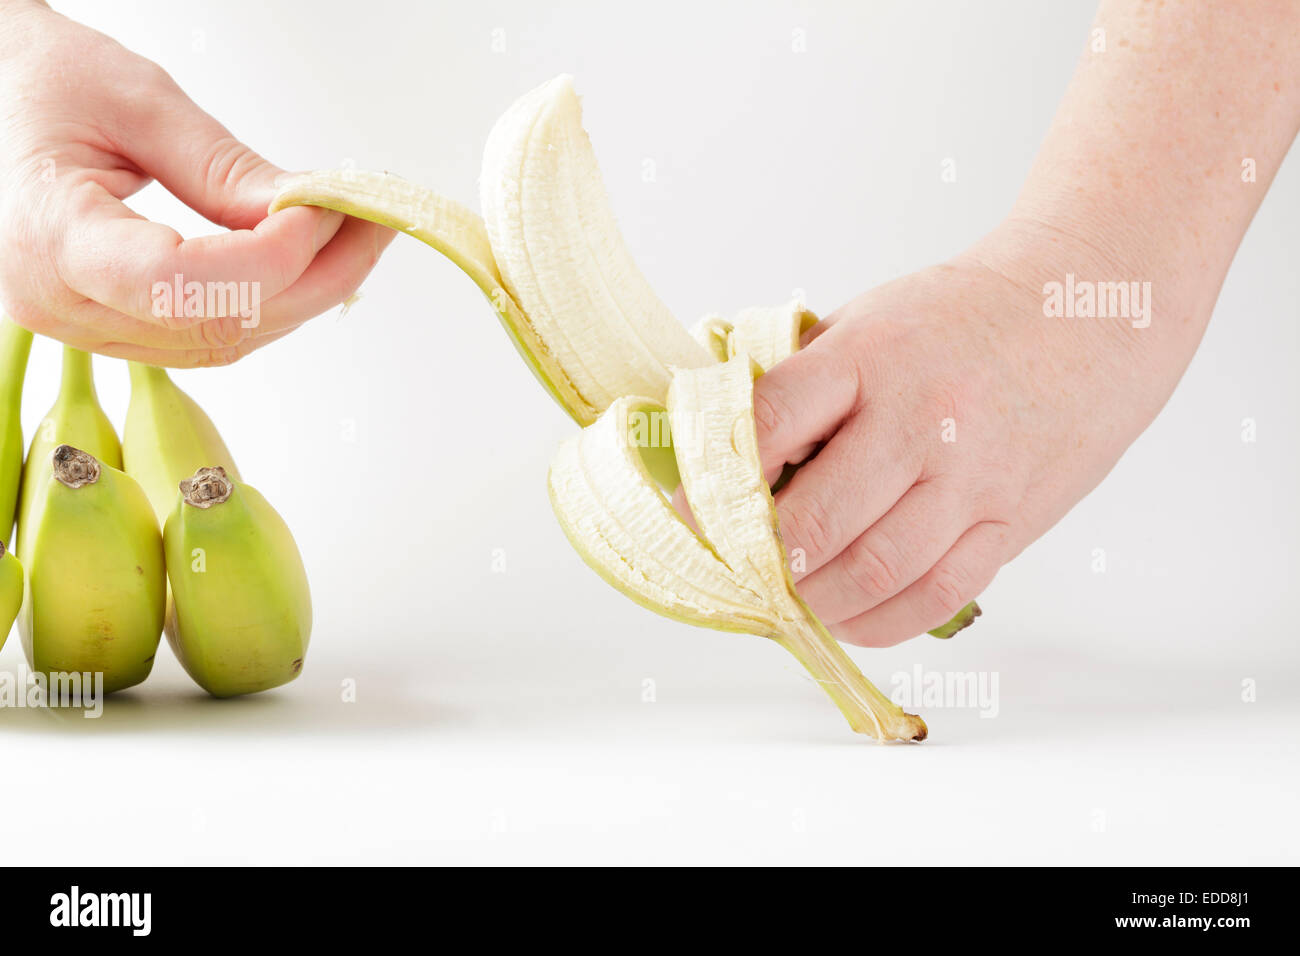 Hands peeling a banana Stock Photo